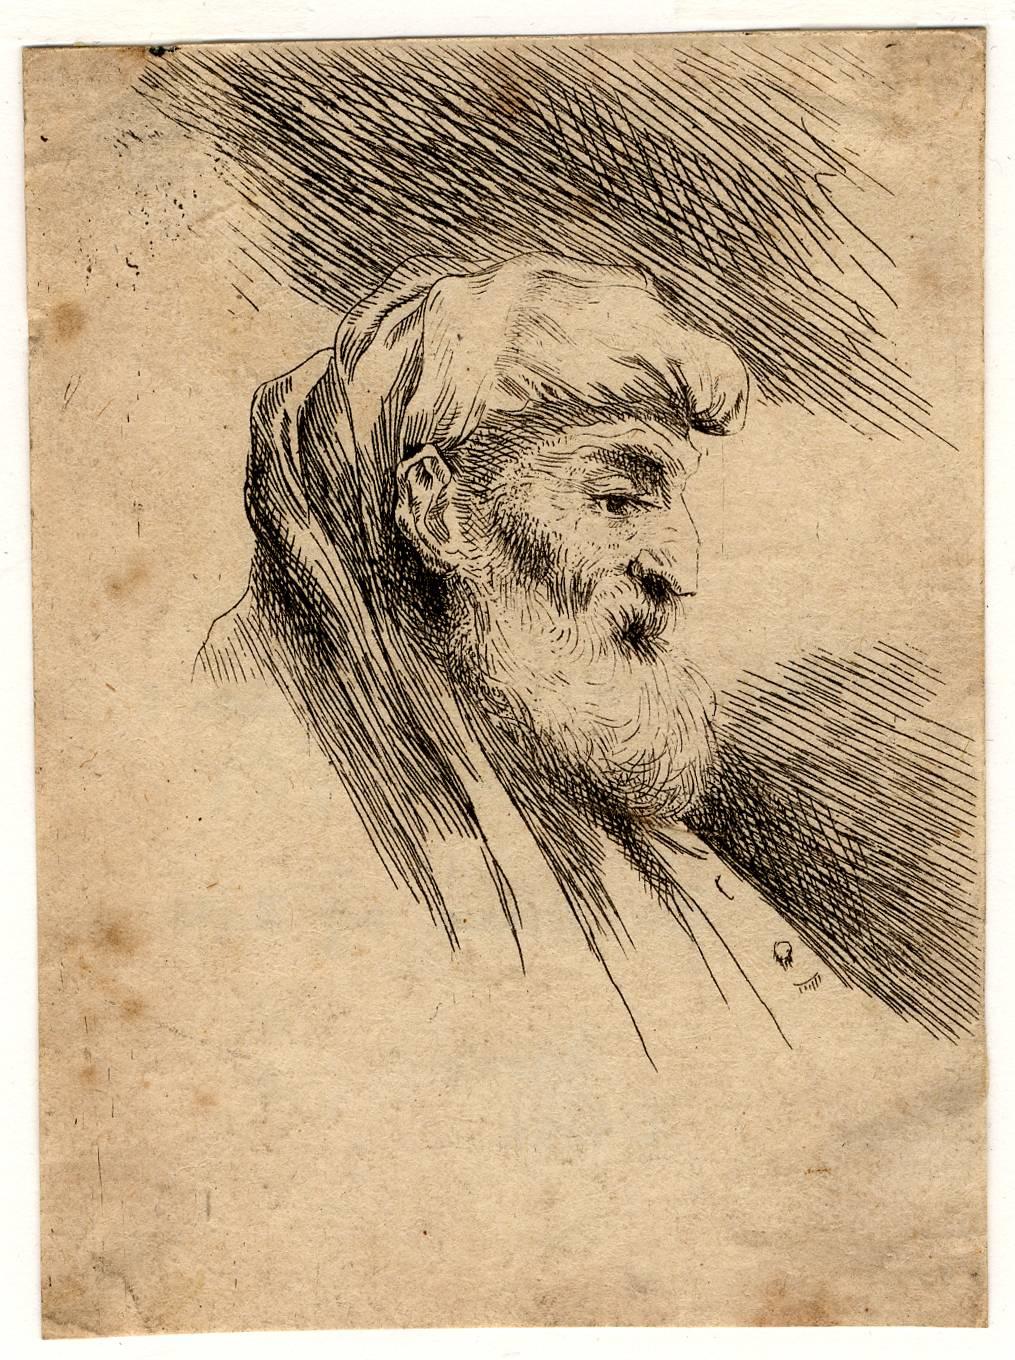 Salvatore Castiglione Portrait Print - Untitled - An oriental figure with a beard and turban.